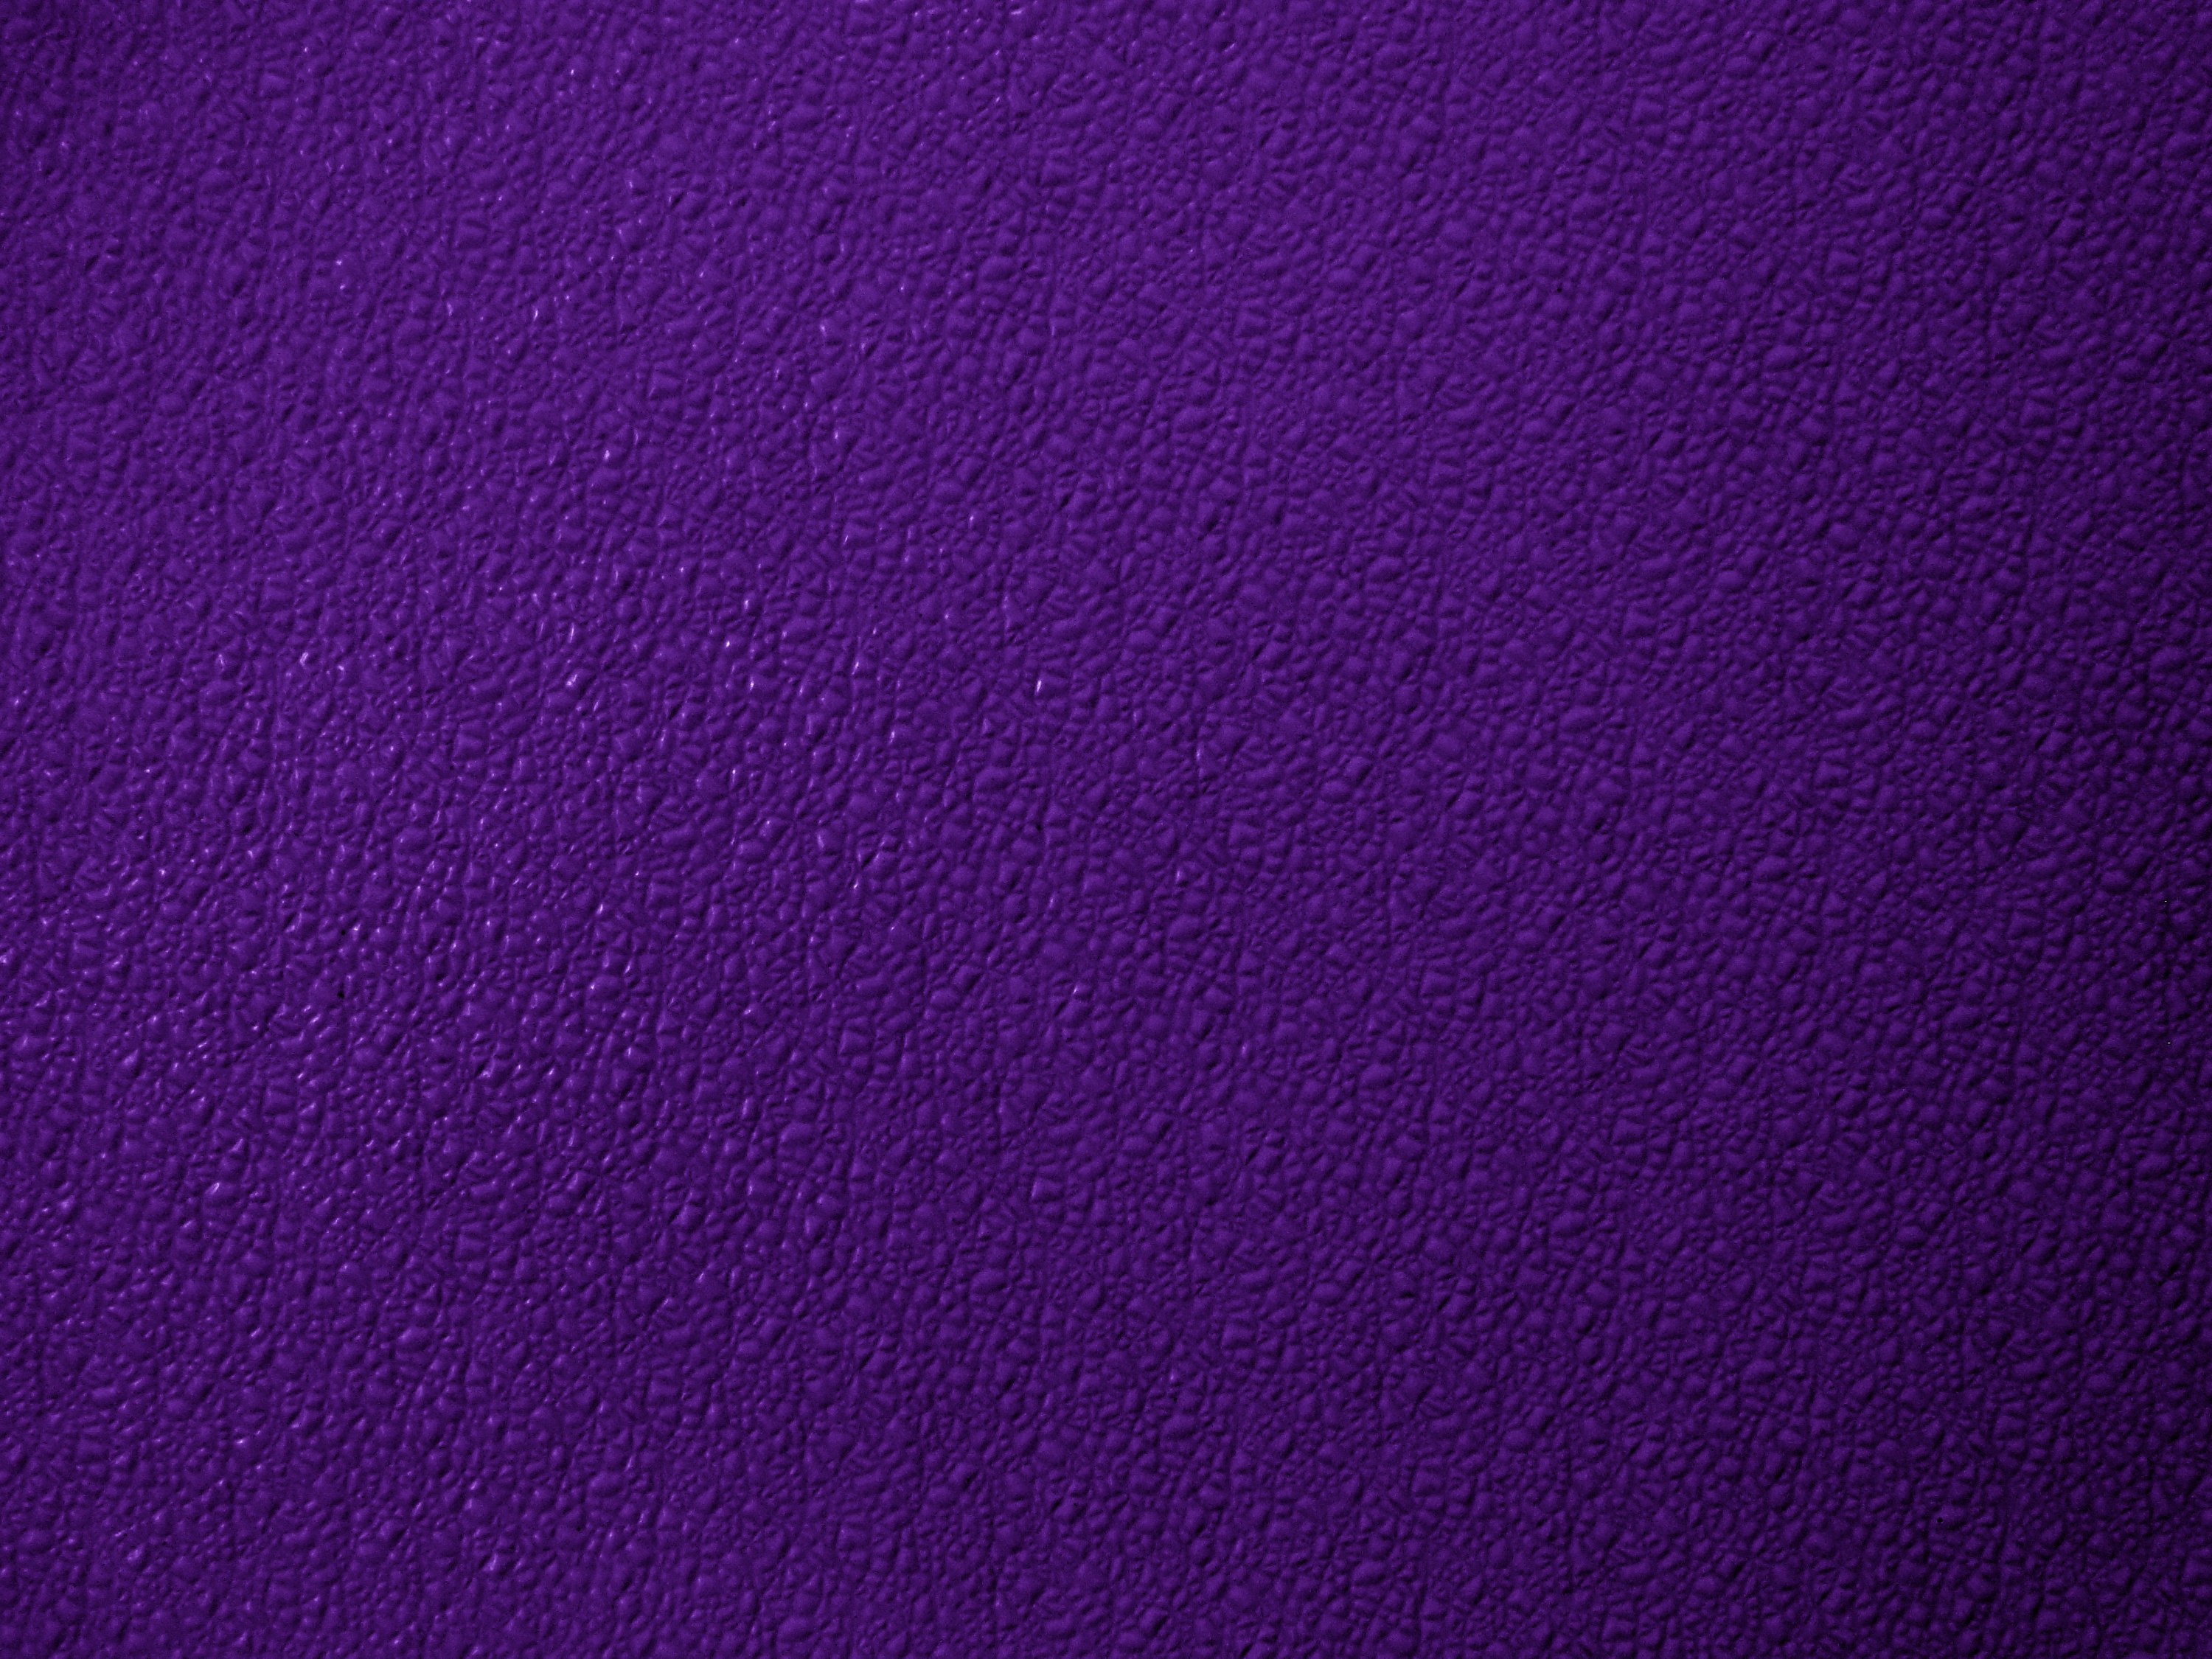 Bumpy Dark Purple Plastic Texture Picture Free Photograph Photos